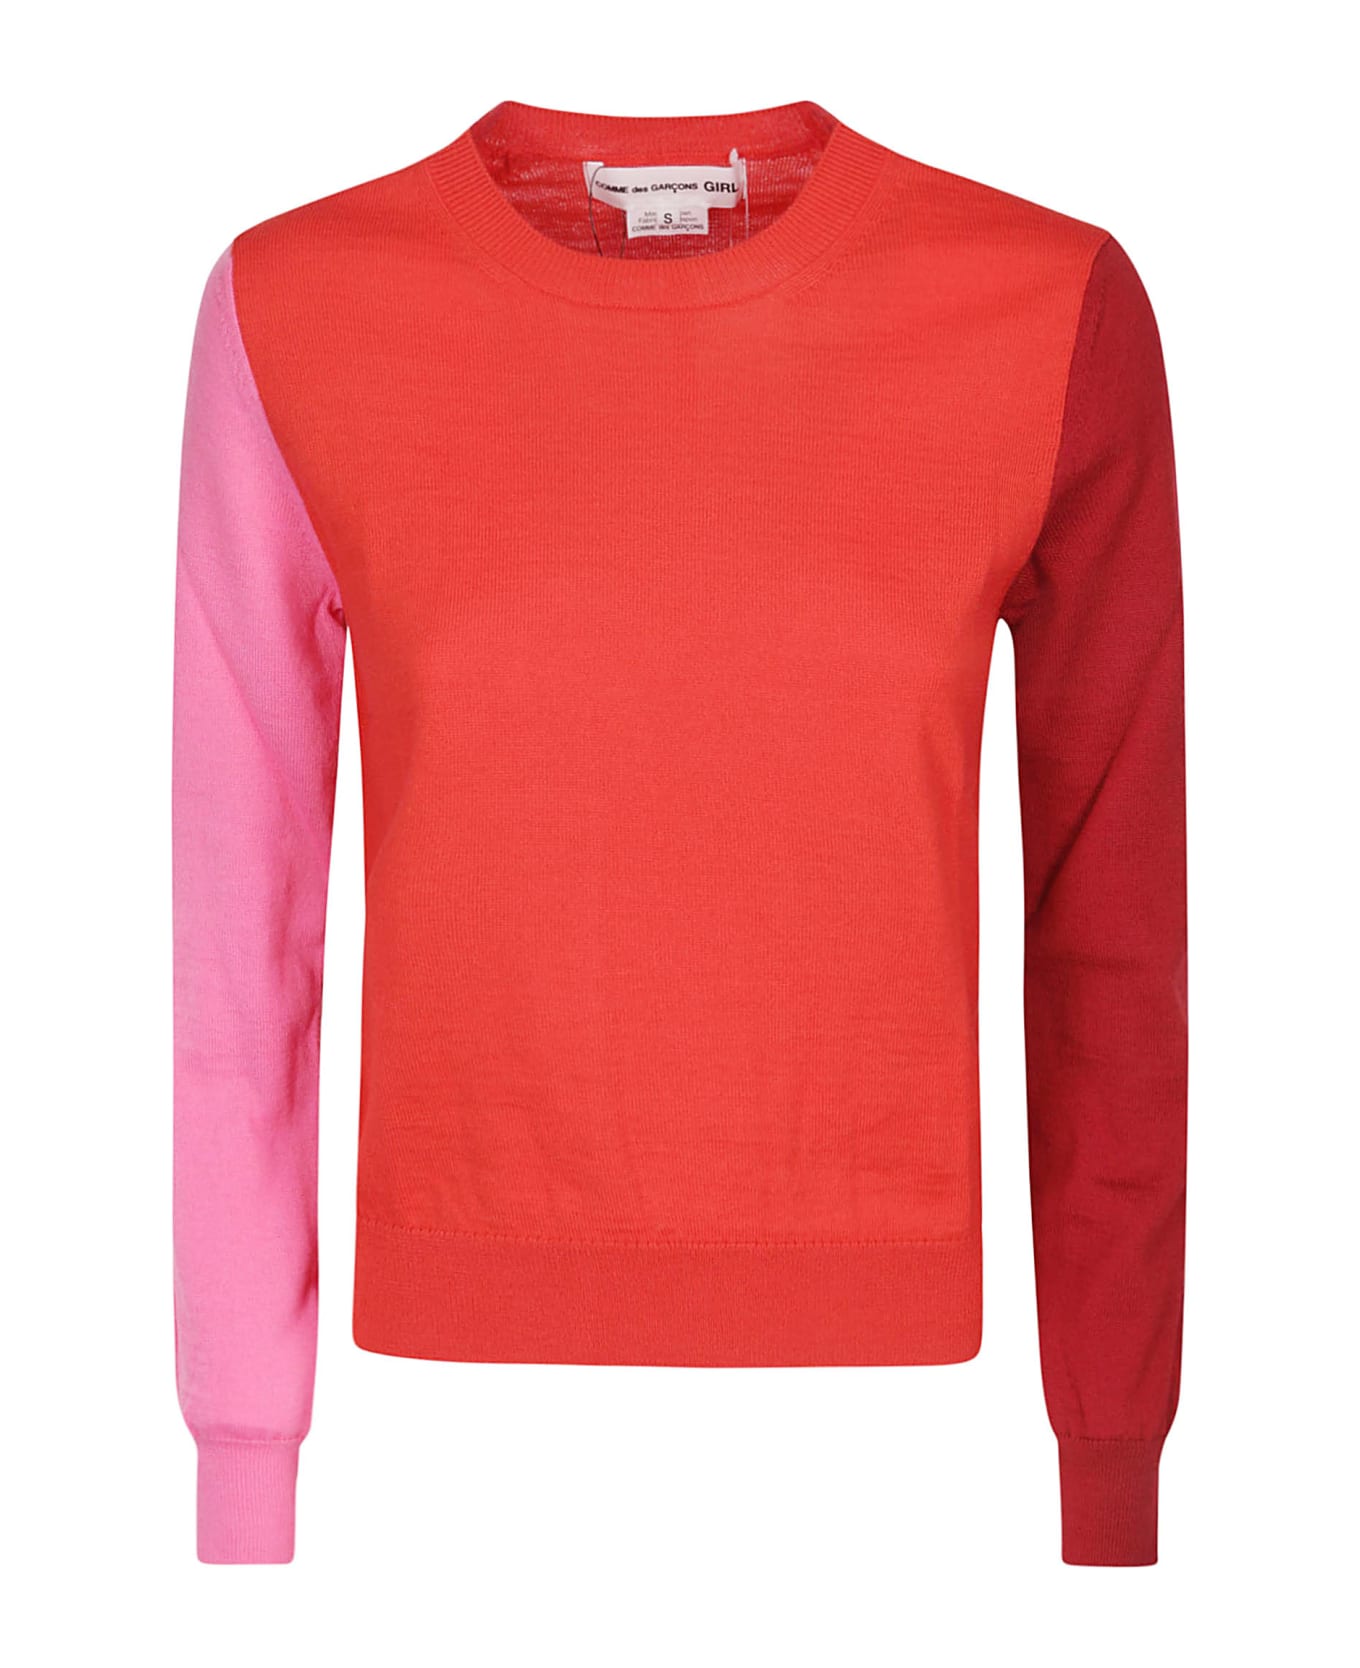 Comme Des Garçons Girl Ladies' Sweater - RED MIX ニットウェア